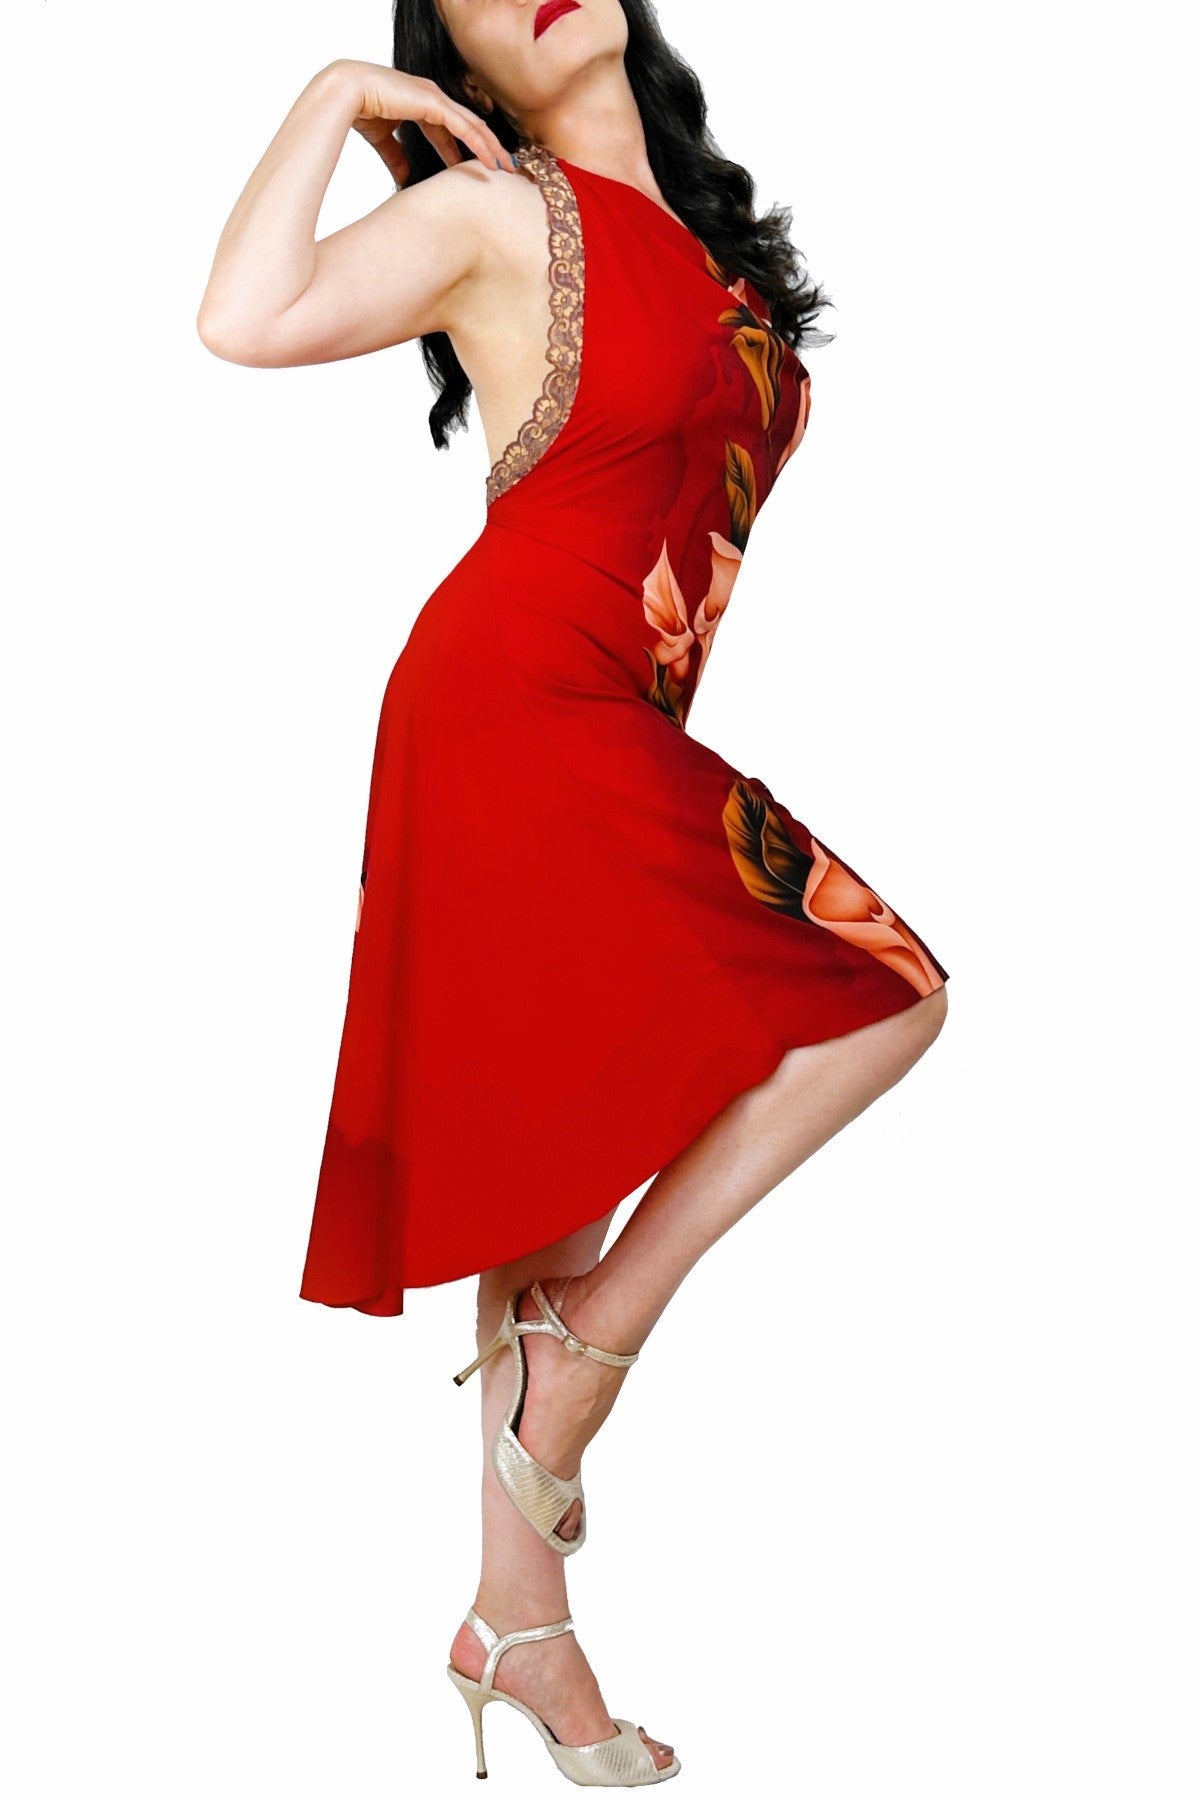 red & lilly backless halter tango dress - Atelier Vertex